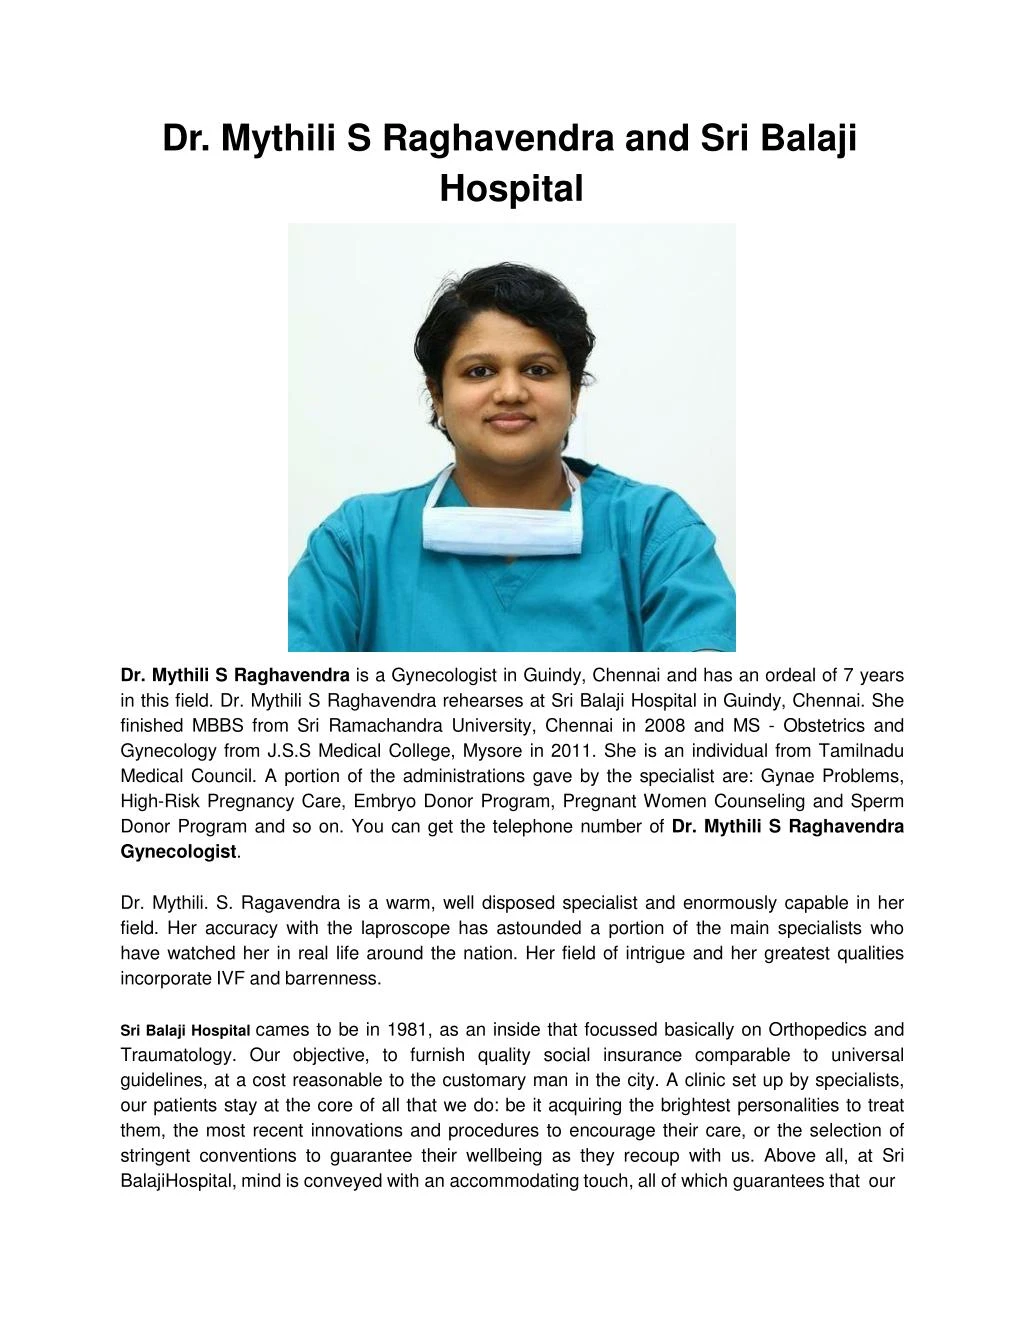 dr mythili s raghavendra and sri balaji hospital